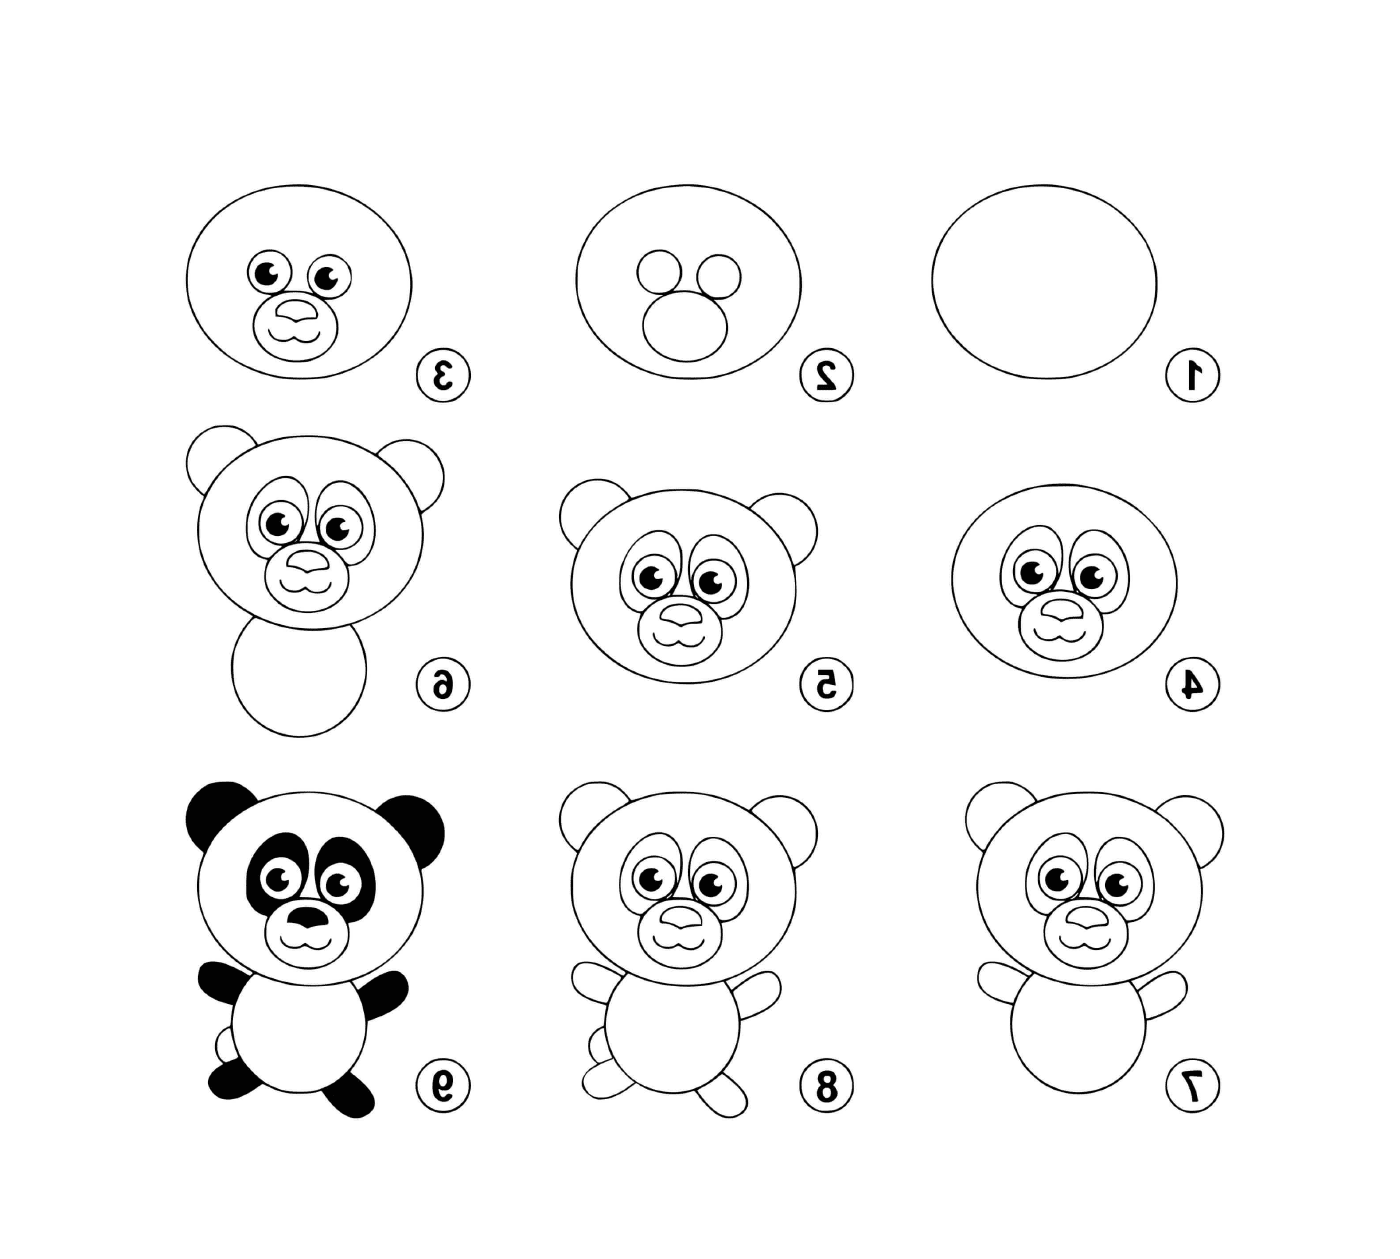  Easy, draw a panda 